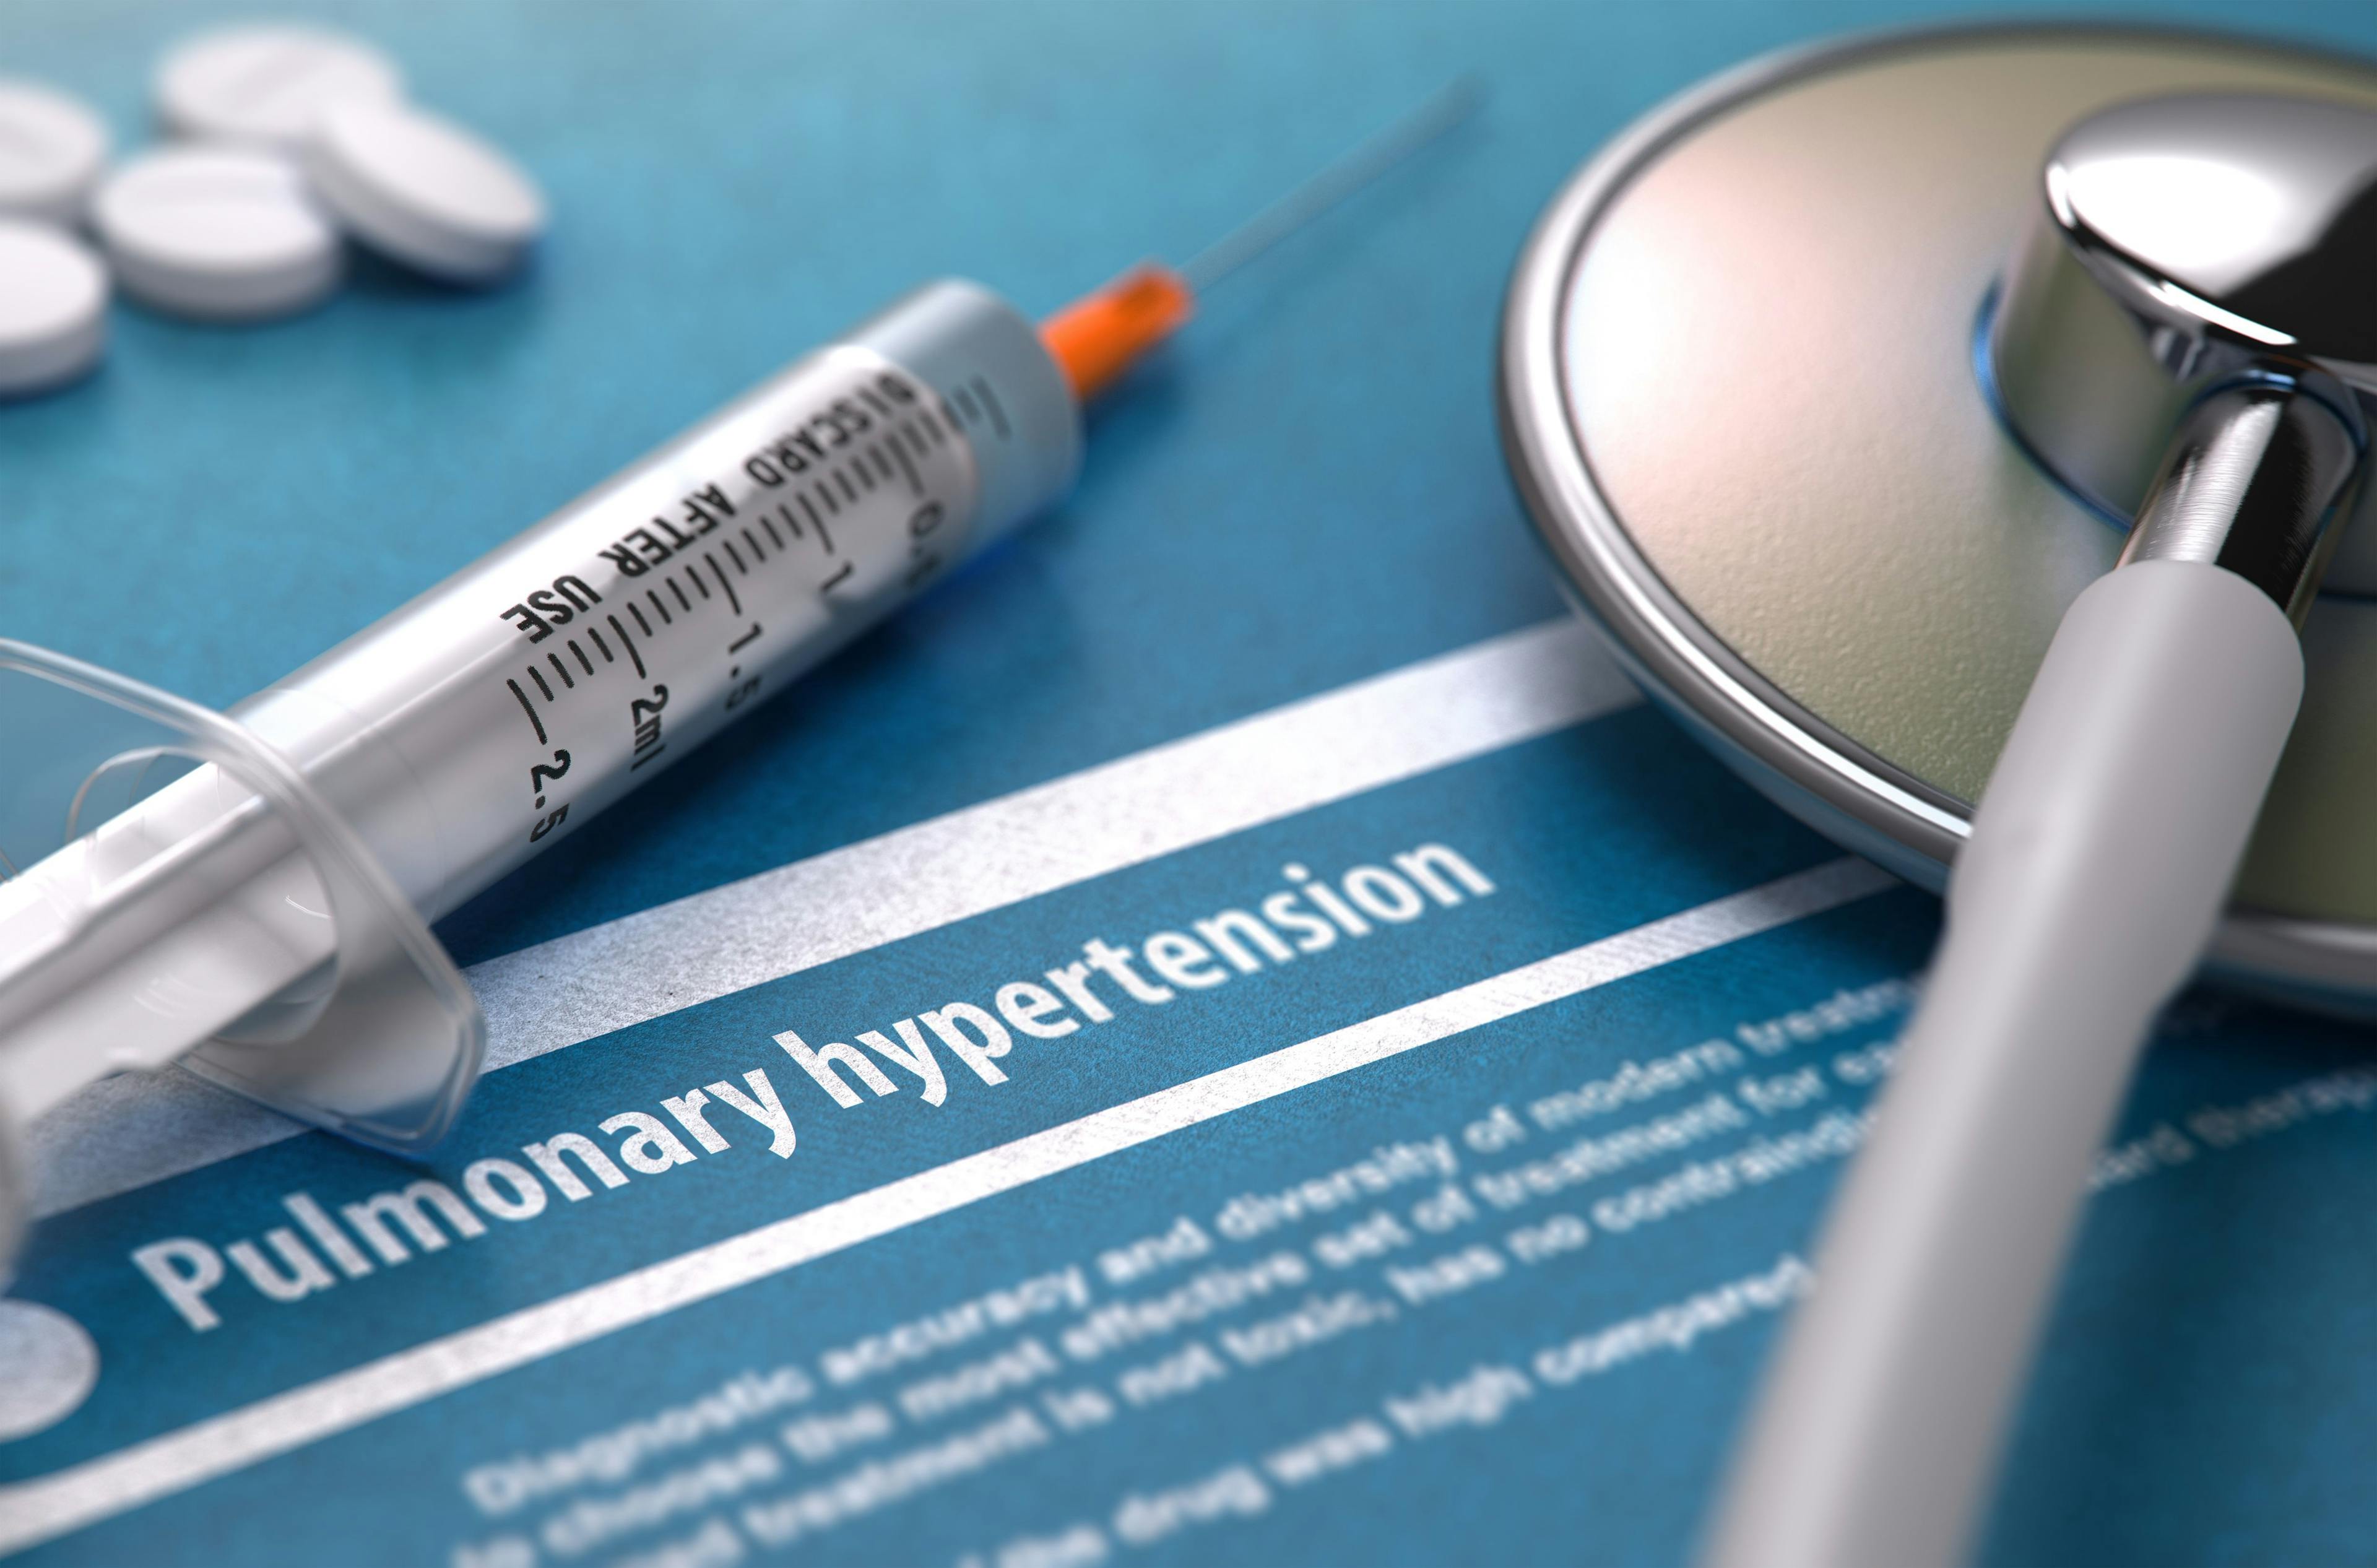 Pulmonary Hypertension Text | image credit: tashatuvango - stock.adobe.com